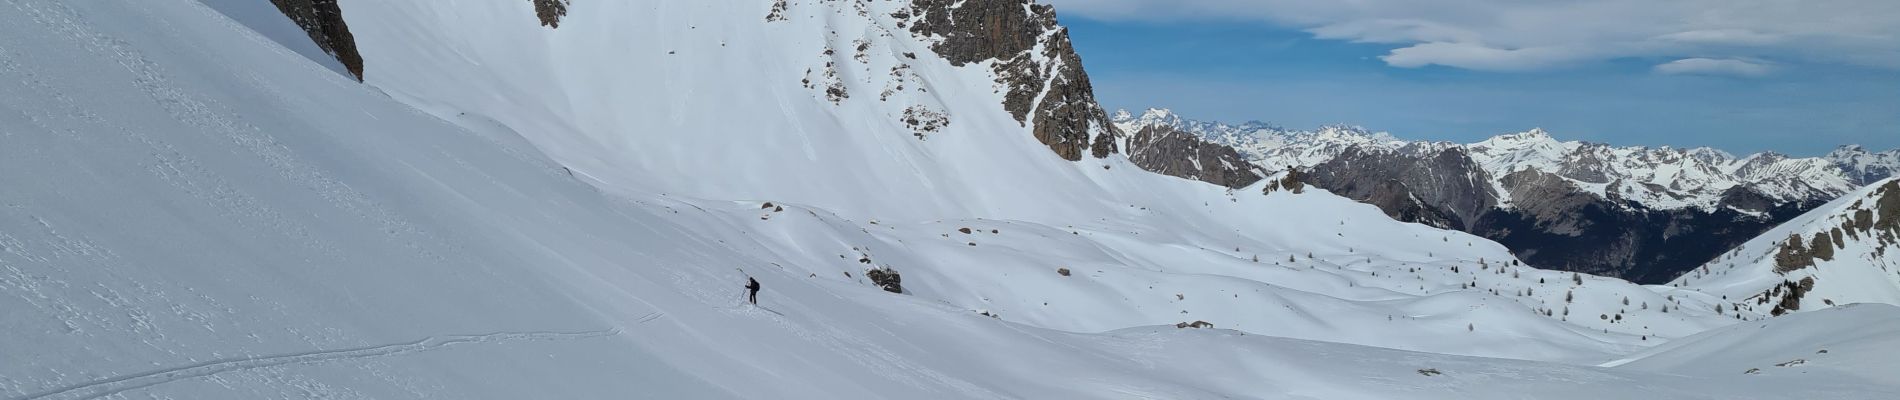 Percorso Sci alpinismo Ceillac - Col et tête de la petite part - Photo